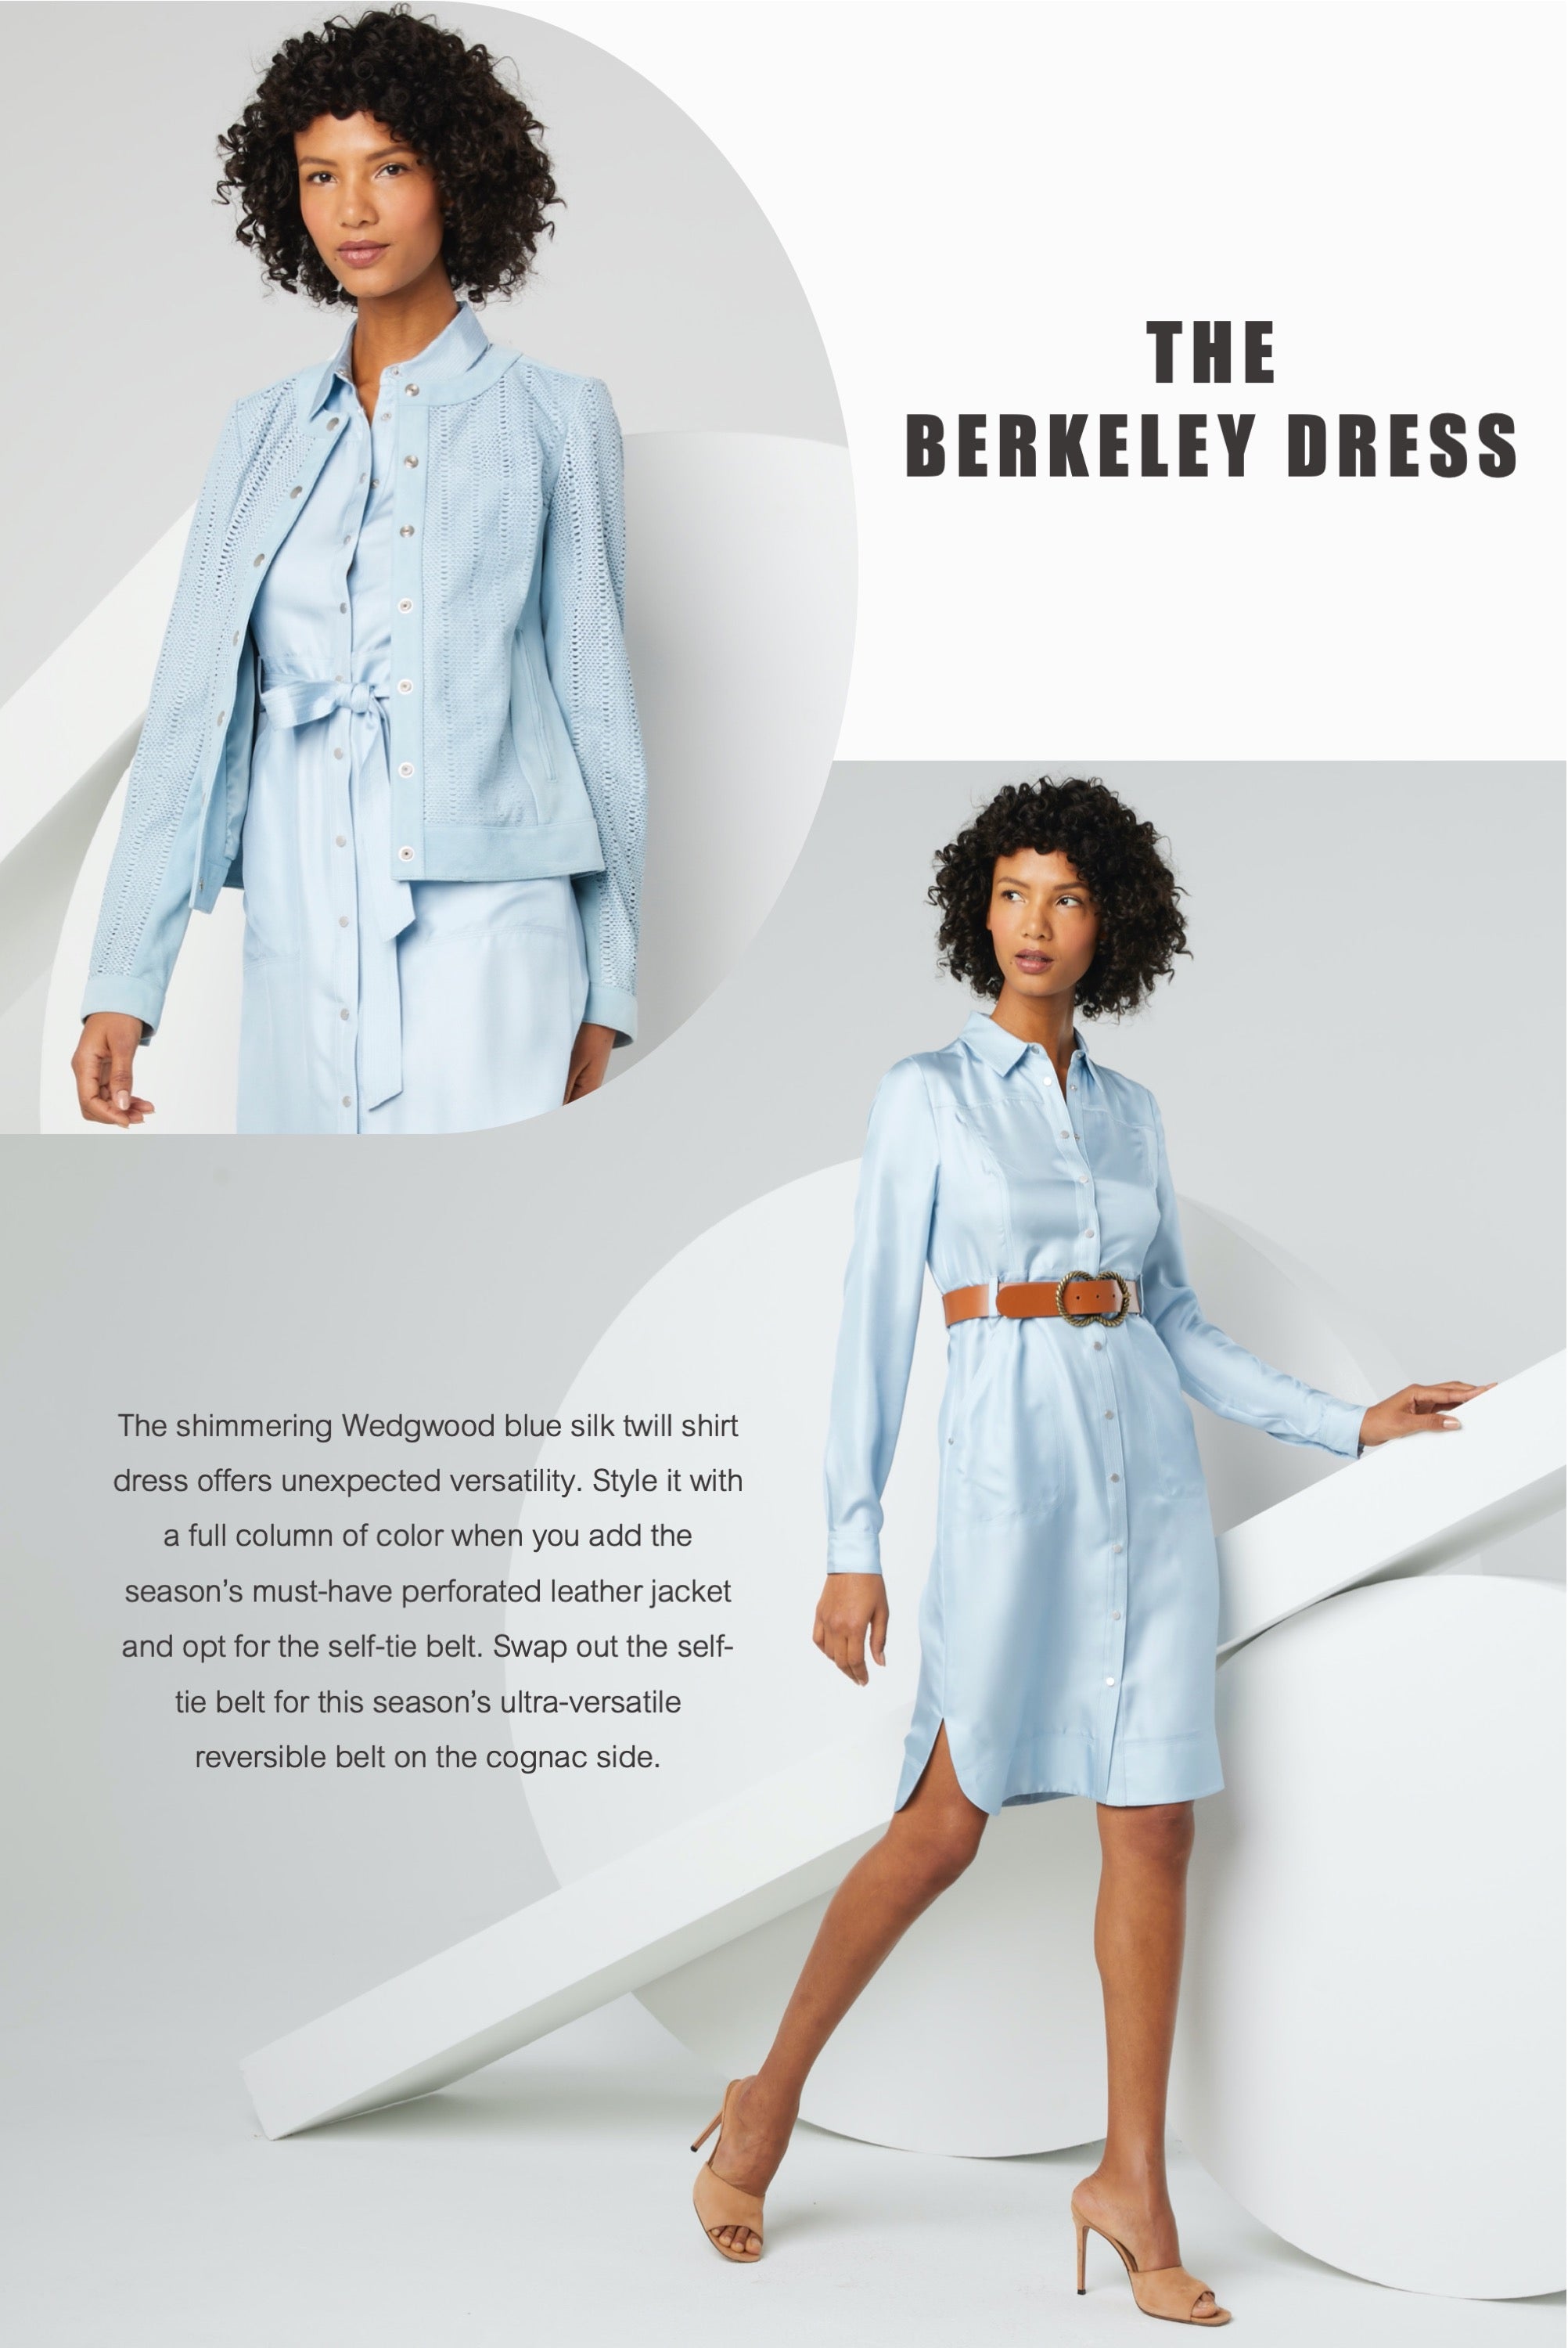 THE BERKELEY DRESS